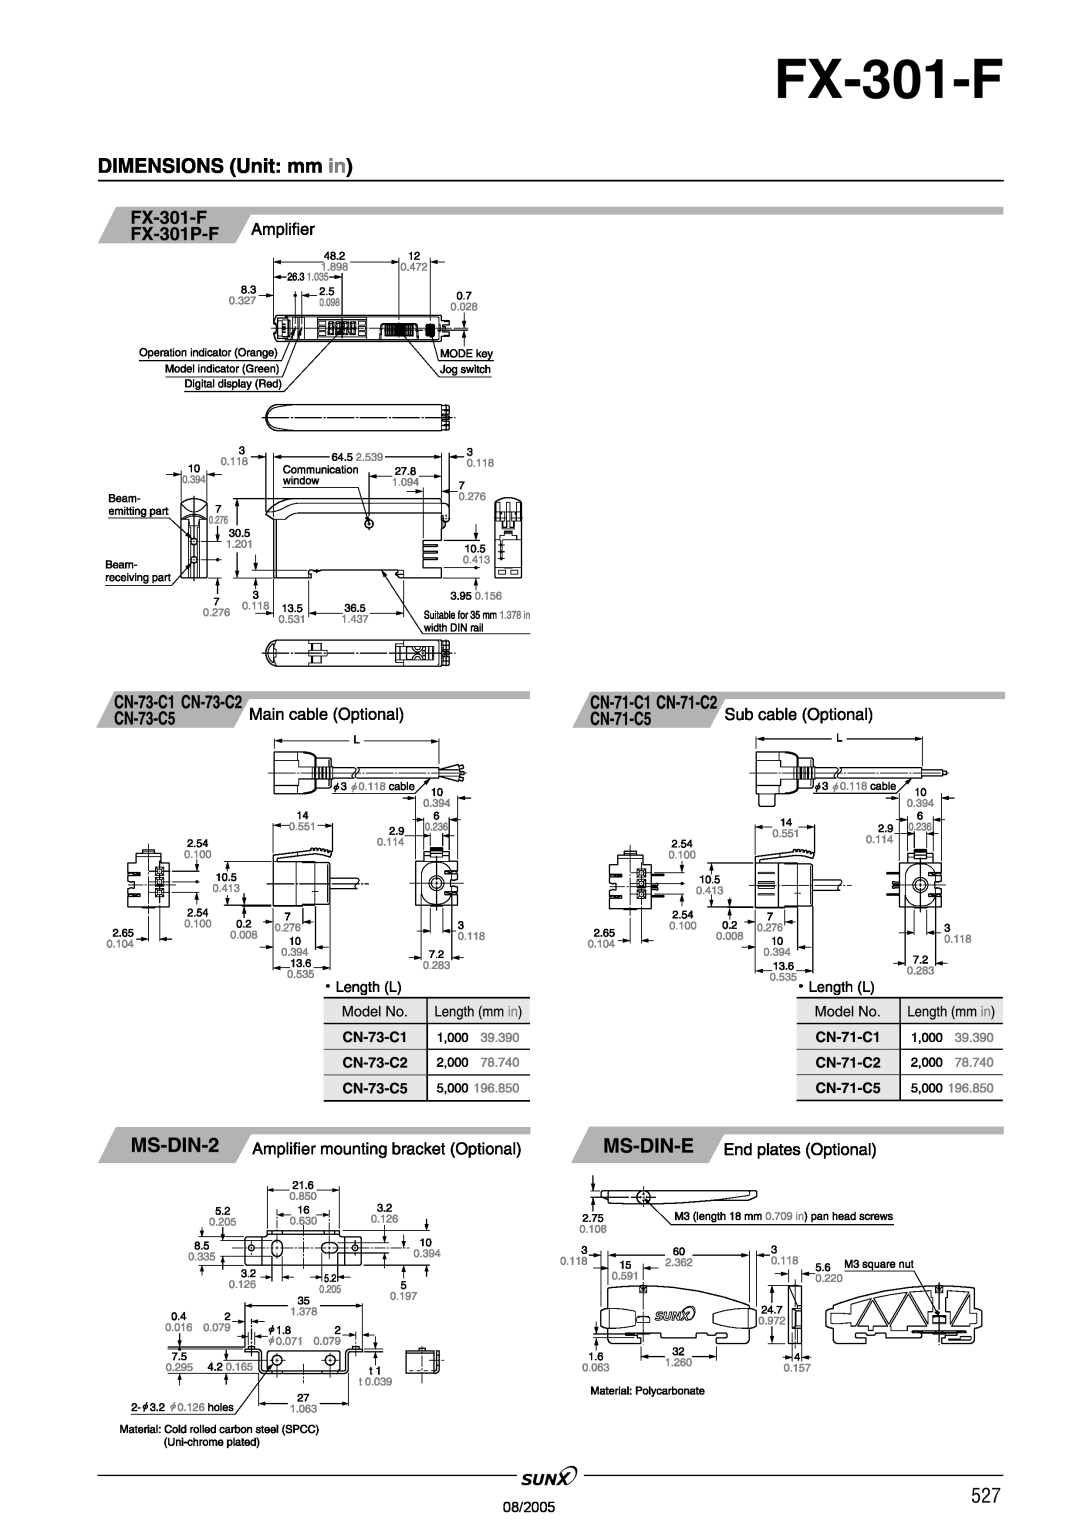 Panasonic manual FX-301-F, 08/2005 